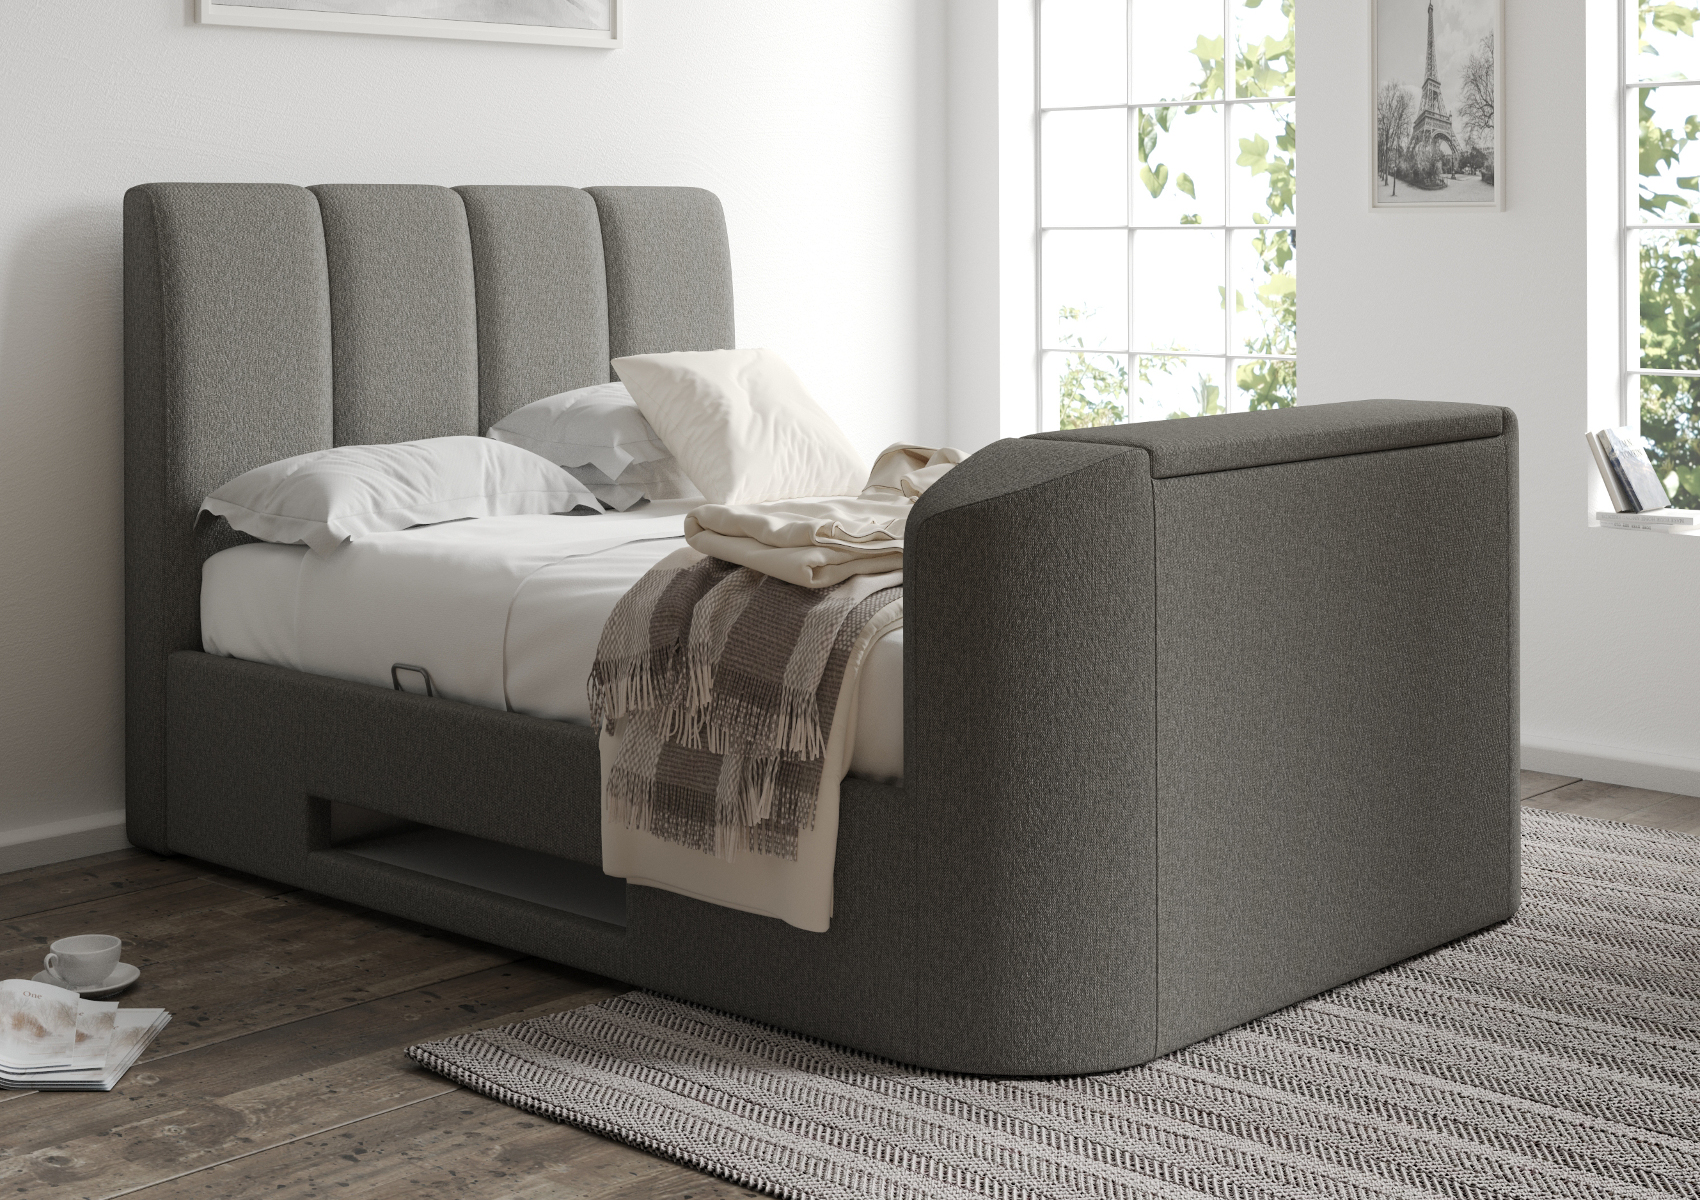 View Copenhagen Upholstered Multifunctional Ottoman Smart TV Bed Frame Foley Grey Time4Sleep information